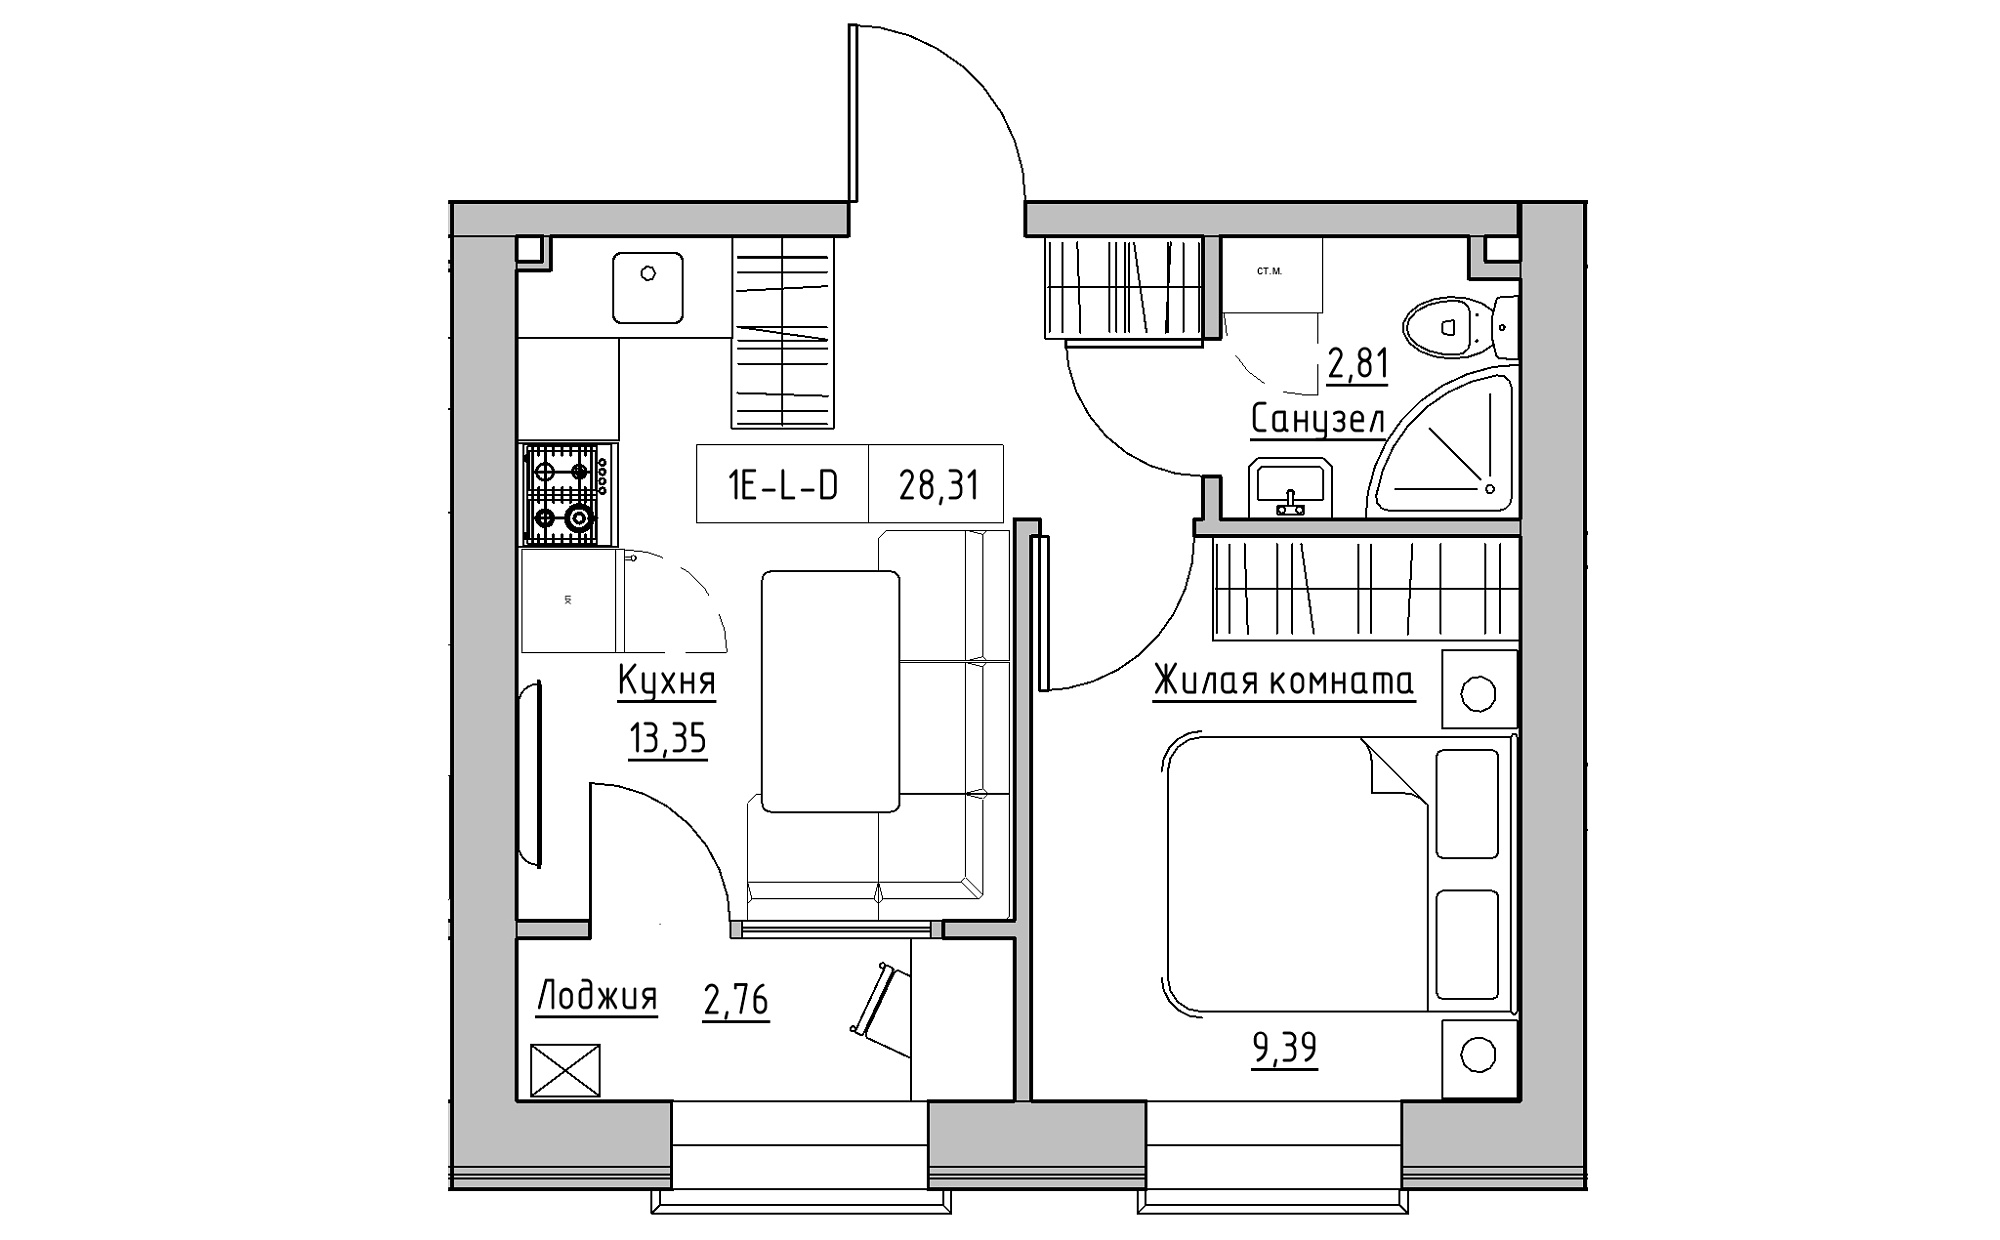 Planning 1-rm flats area 28.31m2, KS-022-03/0001.